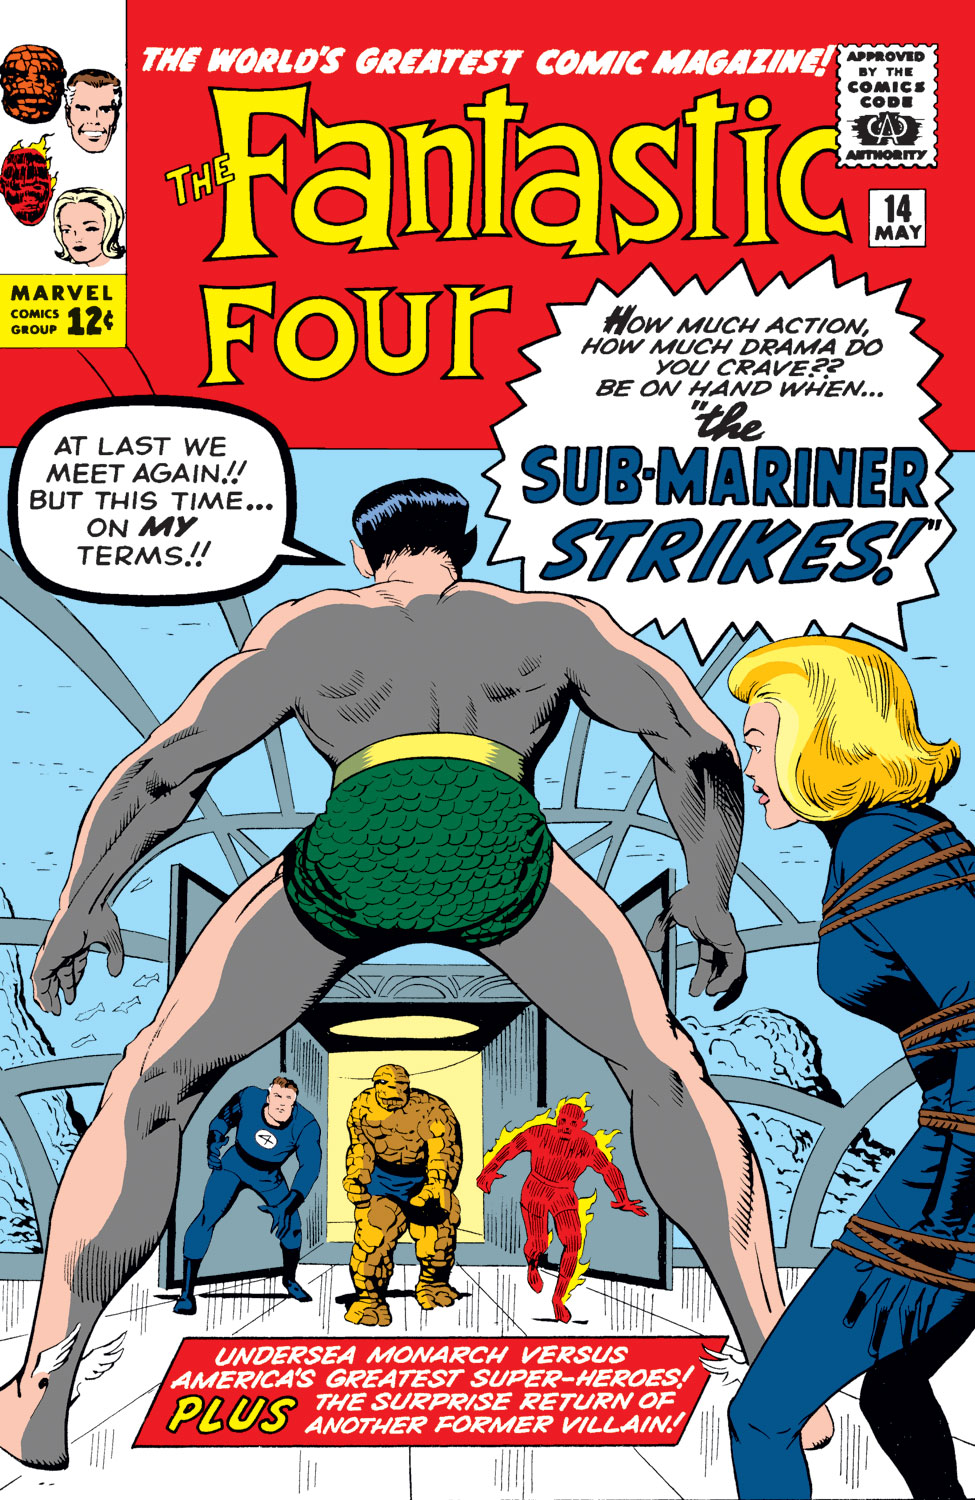 Fantastic Four (1961) #14 | Comic Issues | Marvel